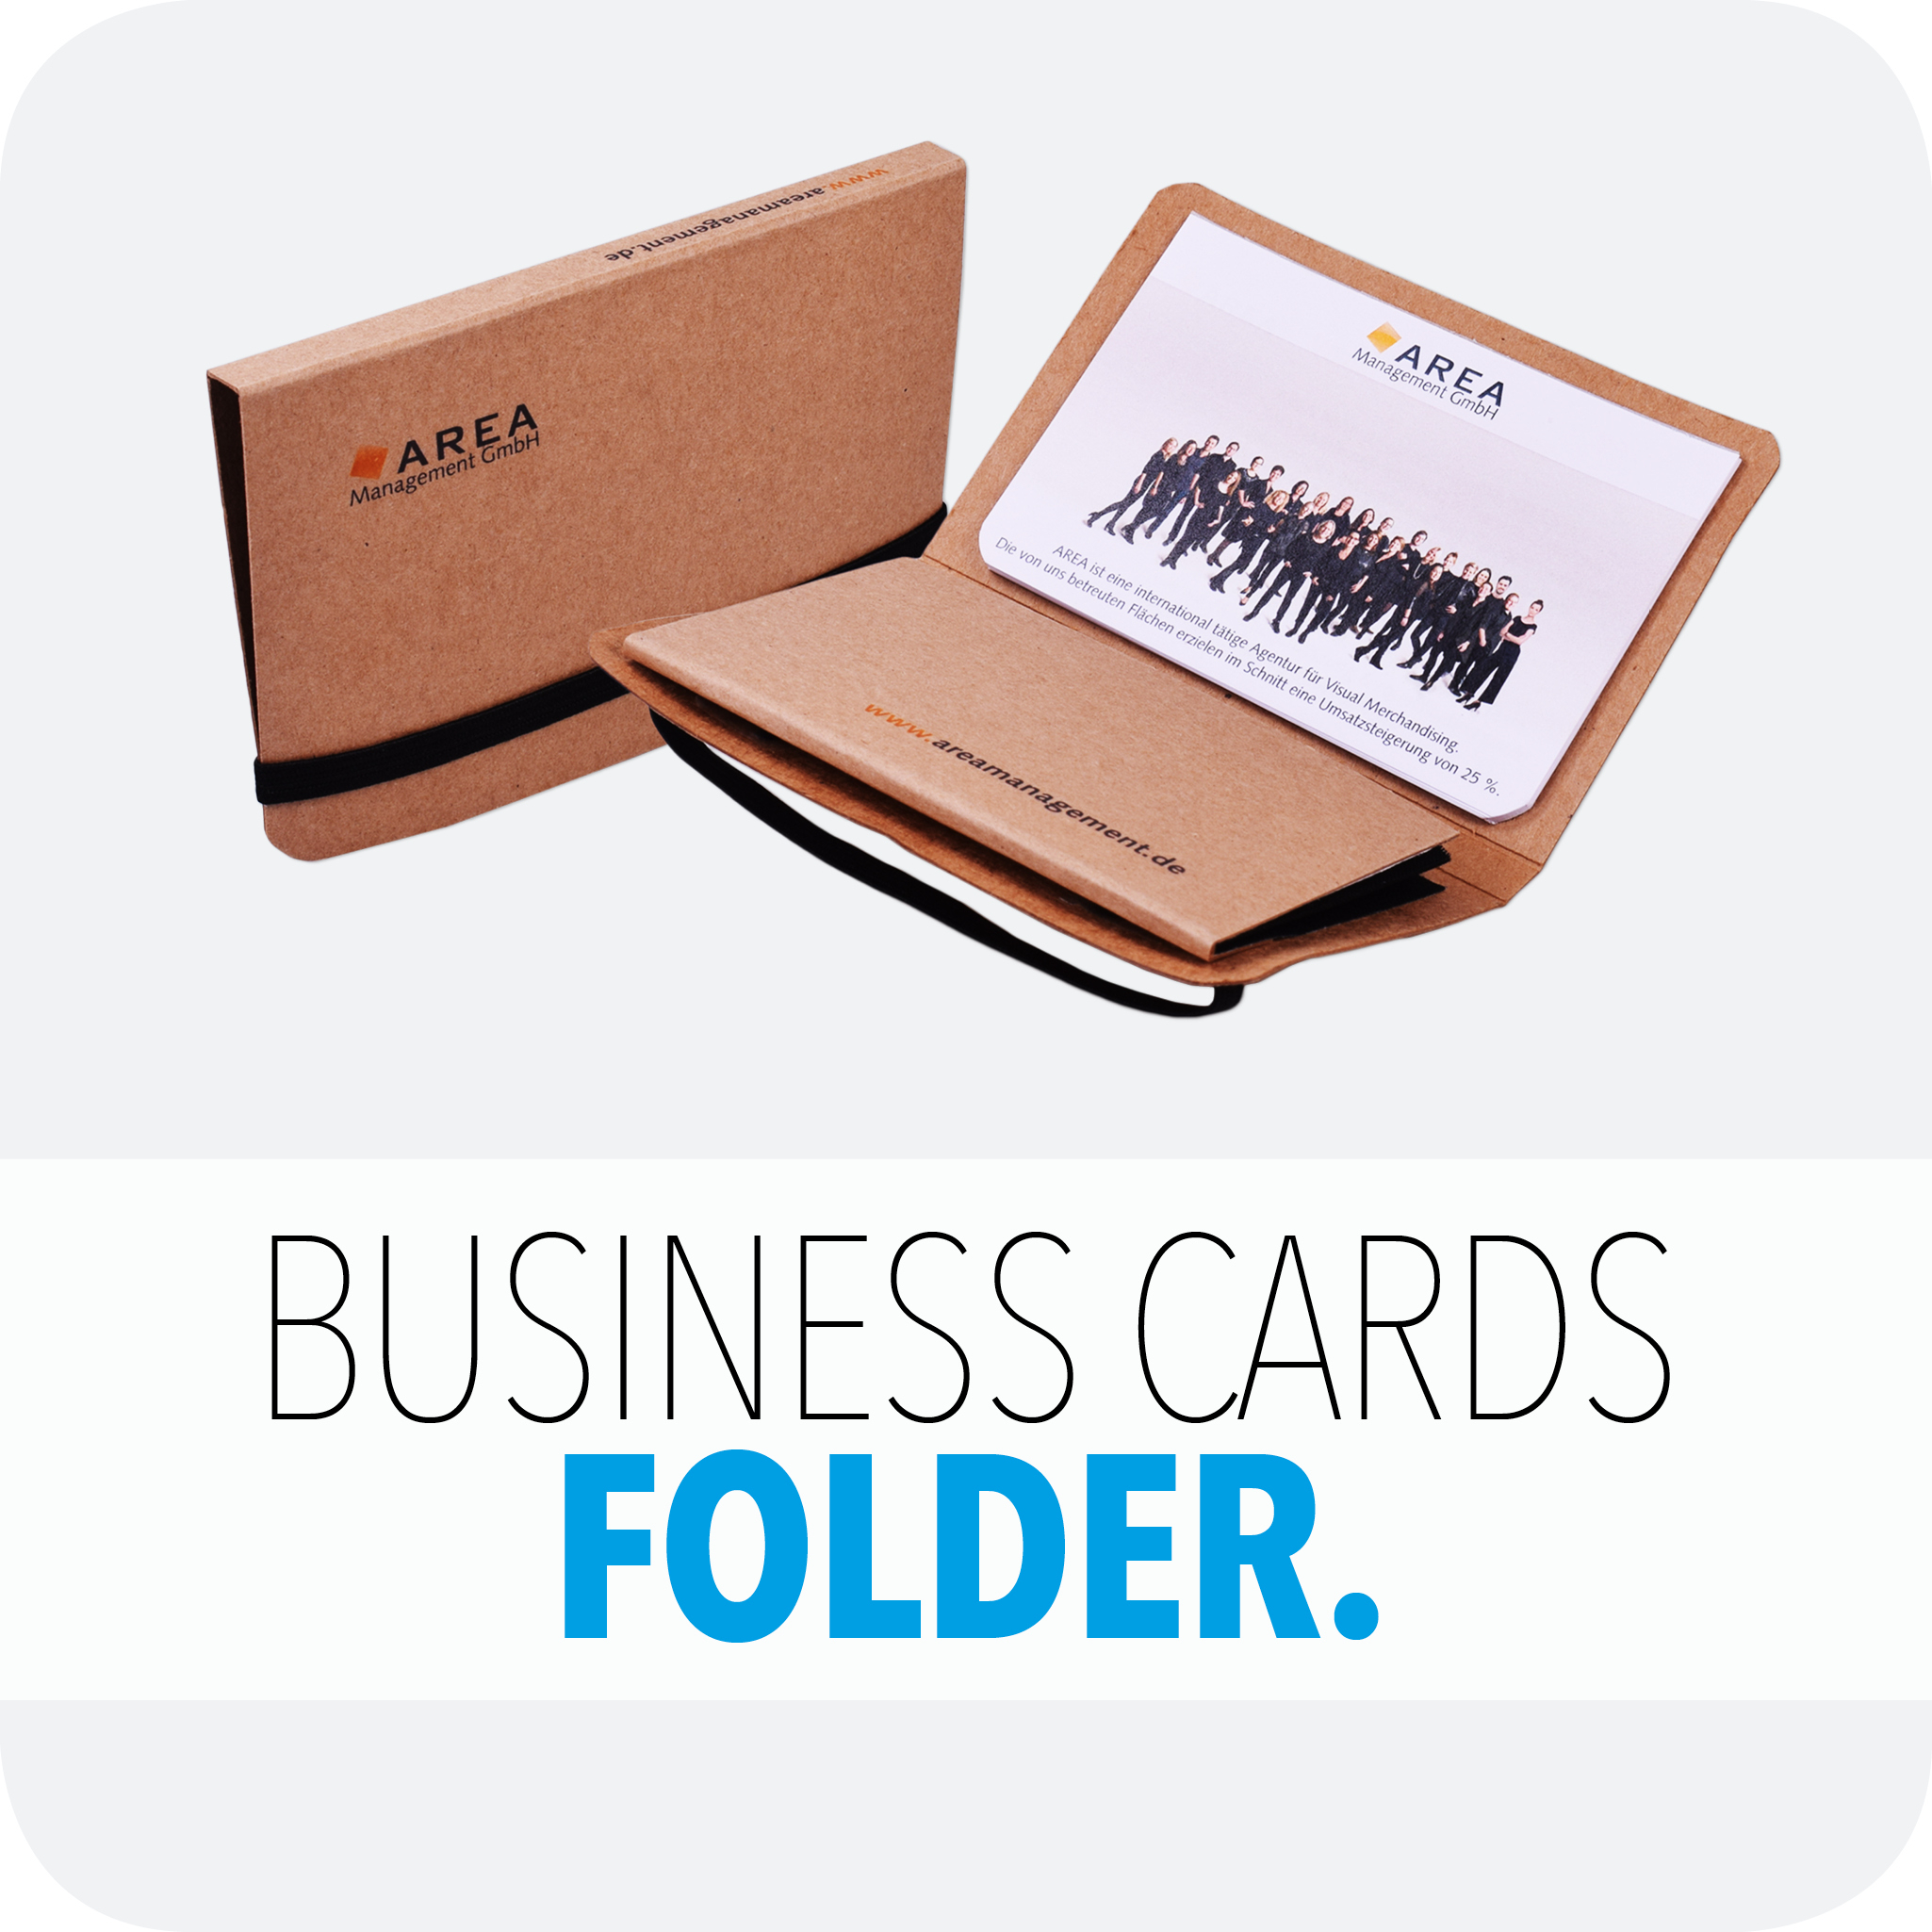 Business cards folder